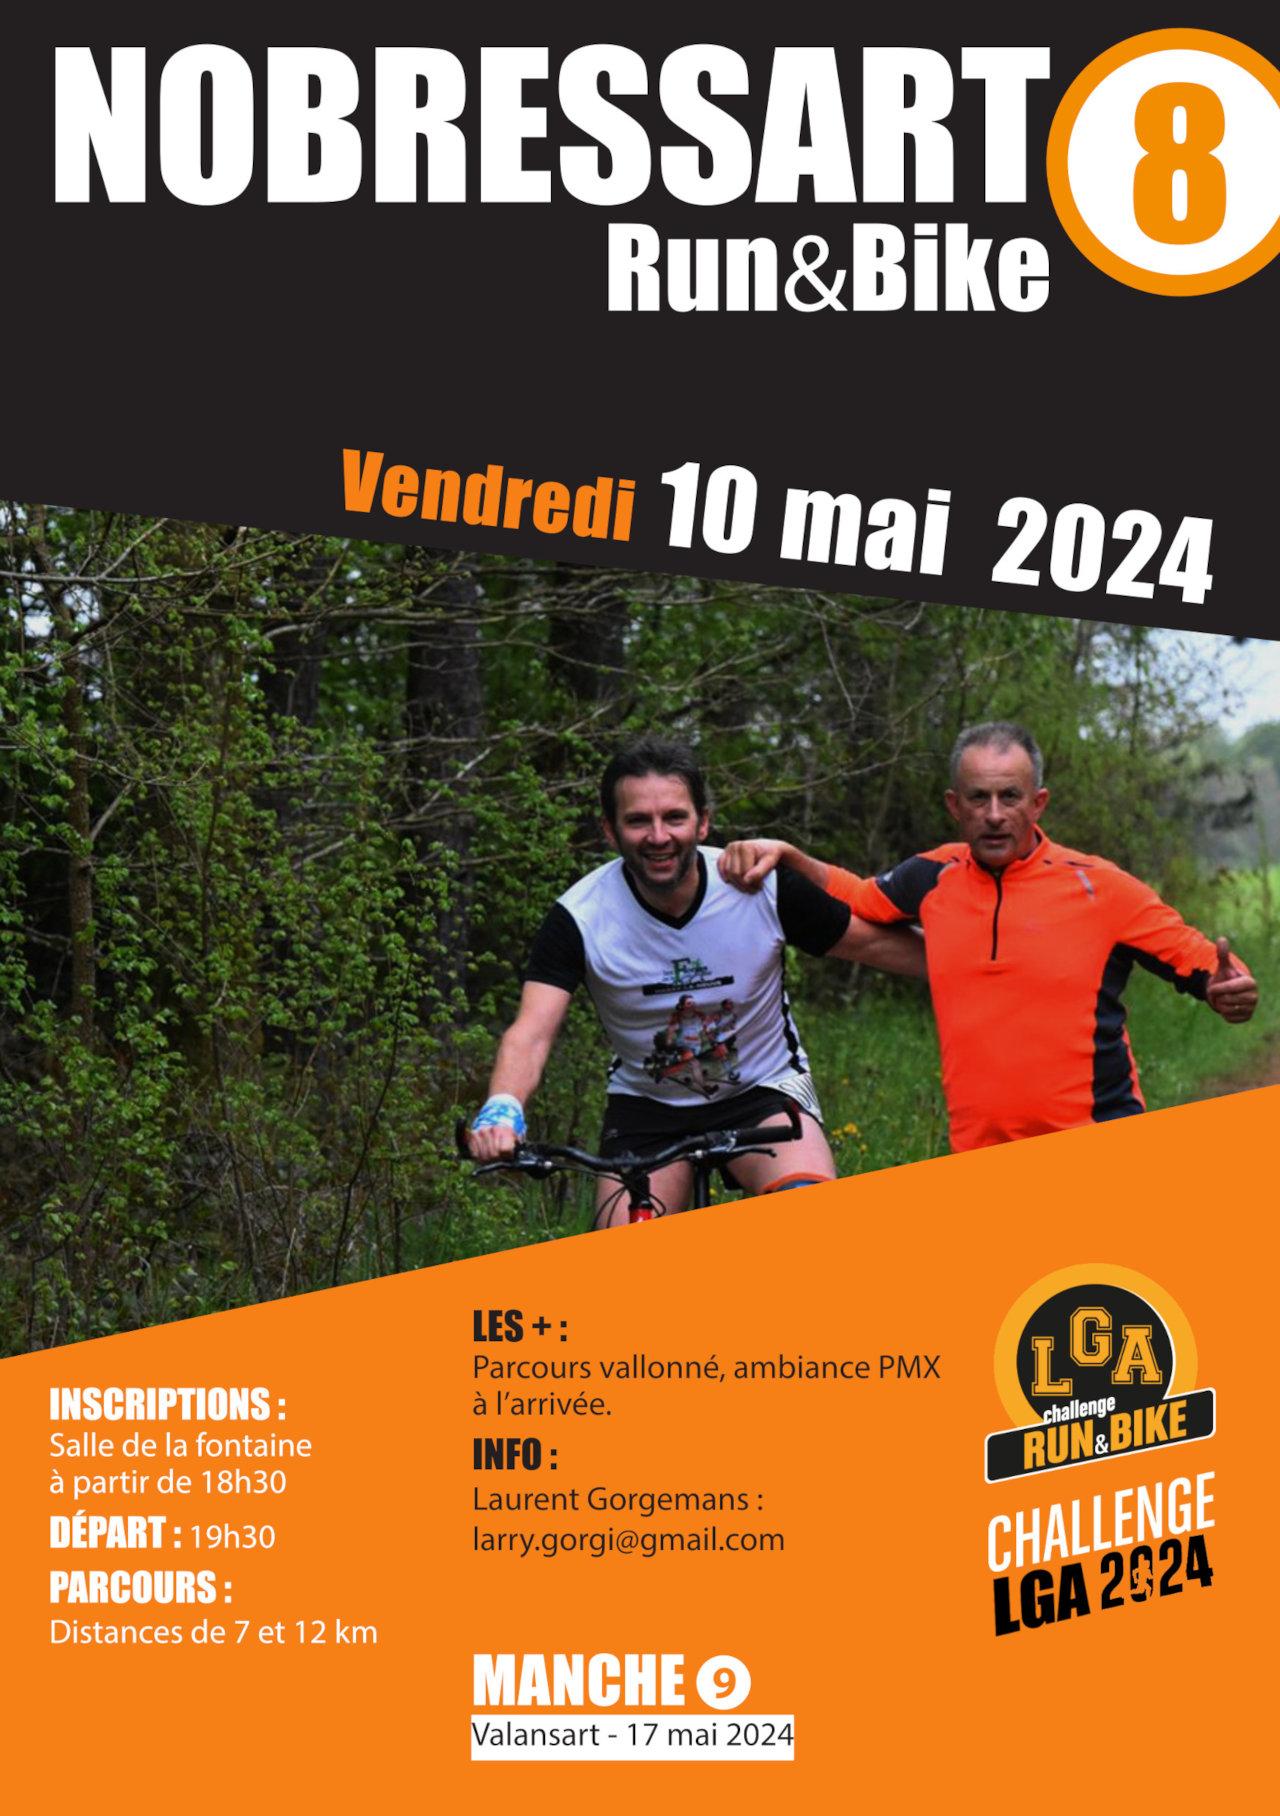 Run & Bike | Nobressart